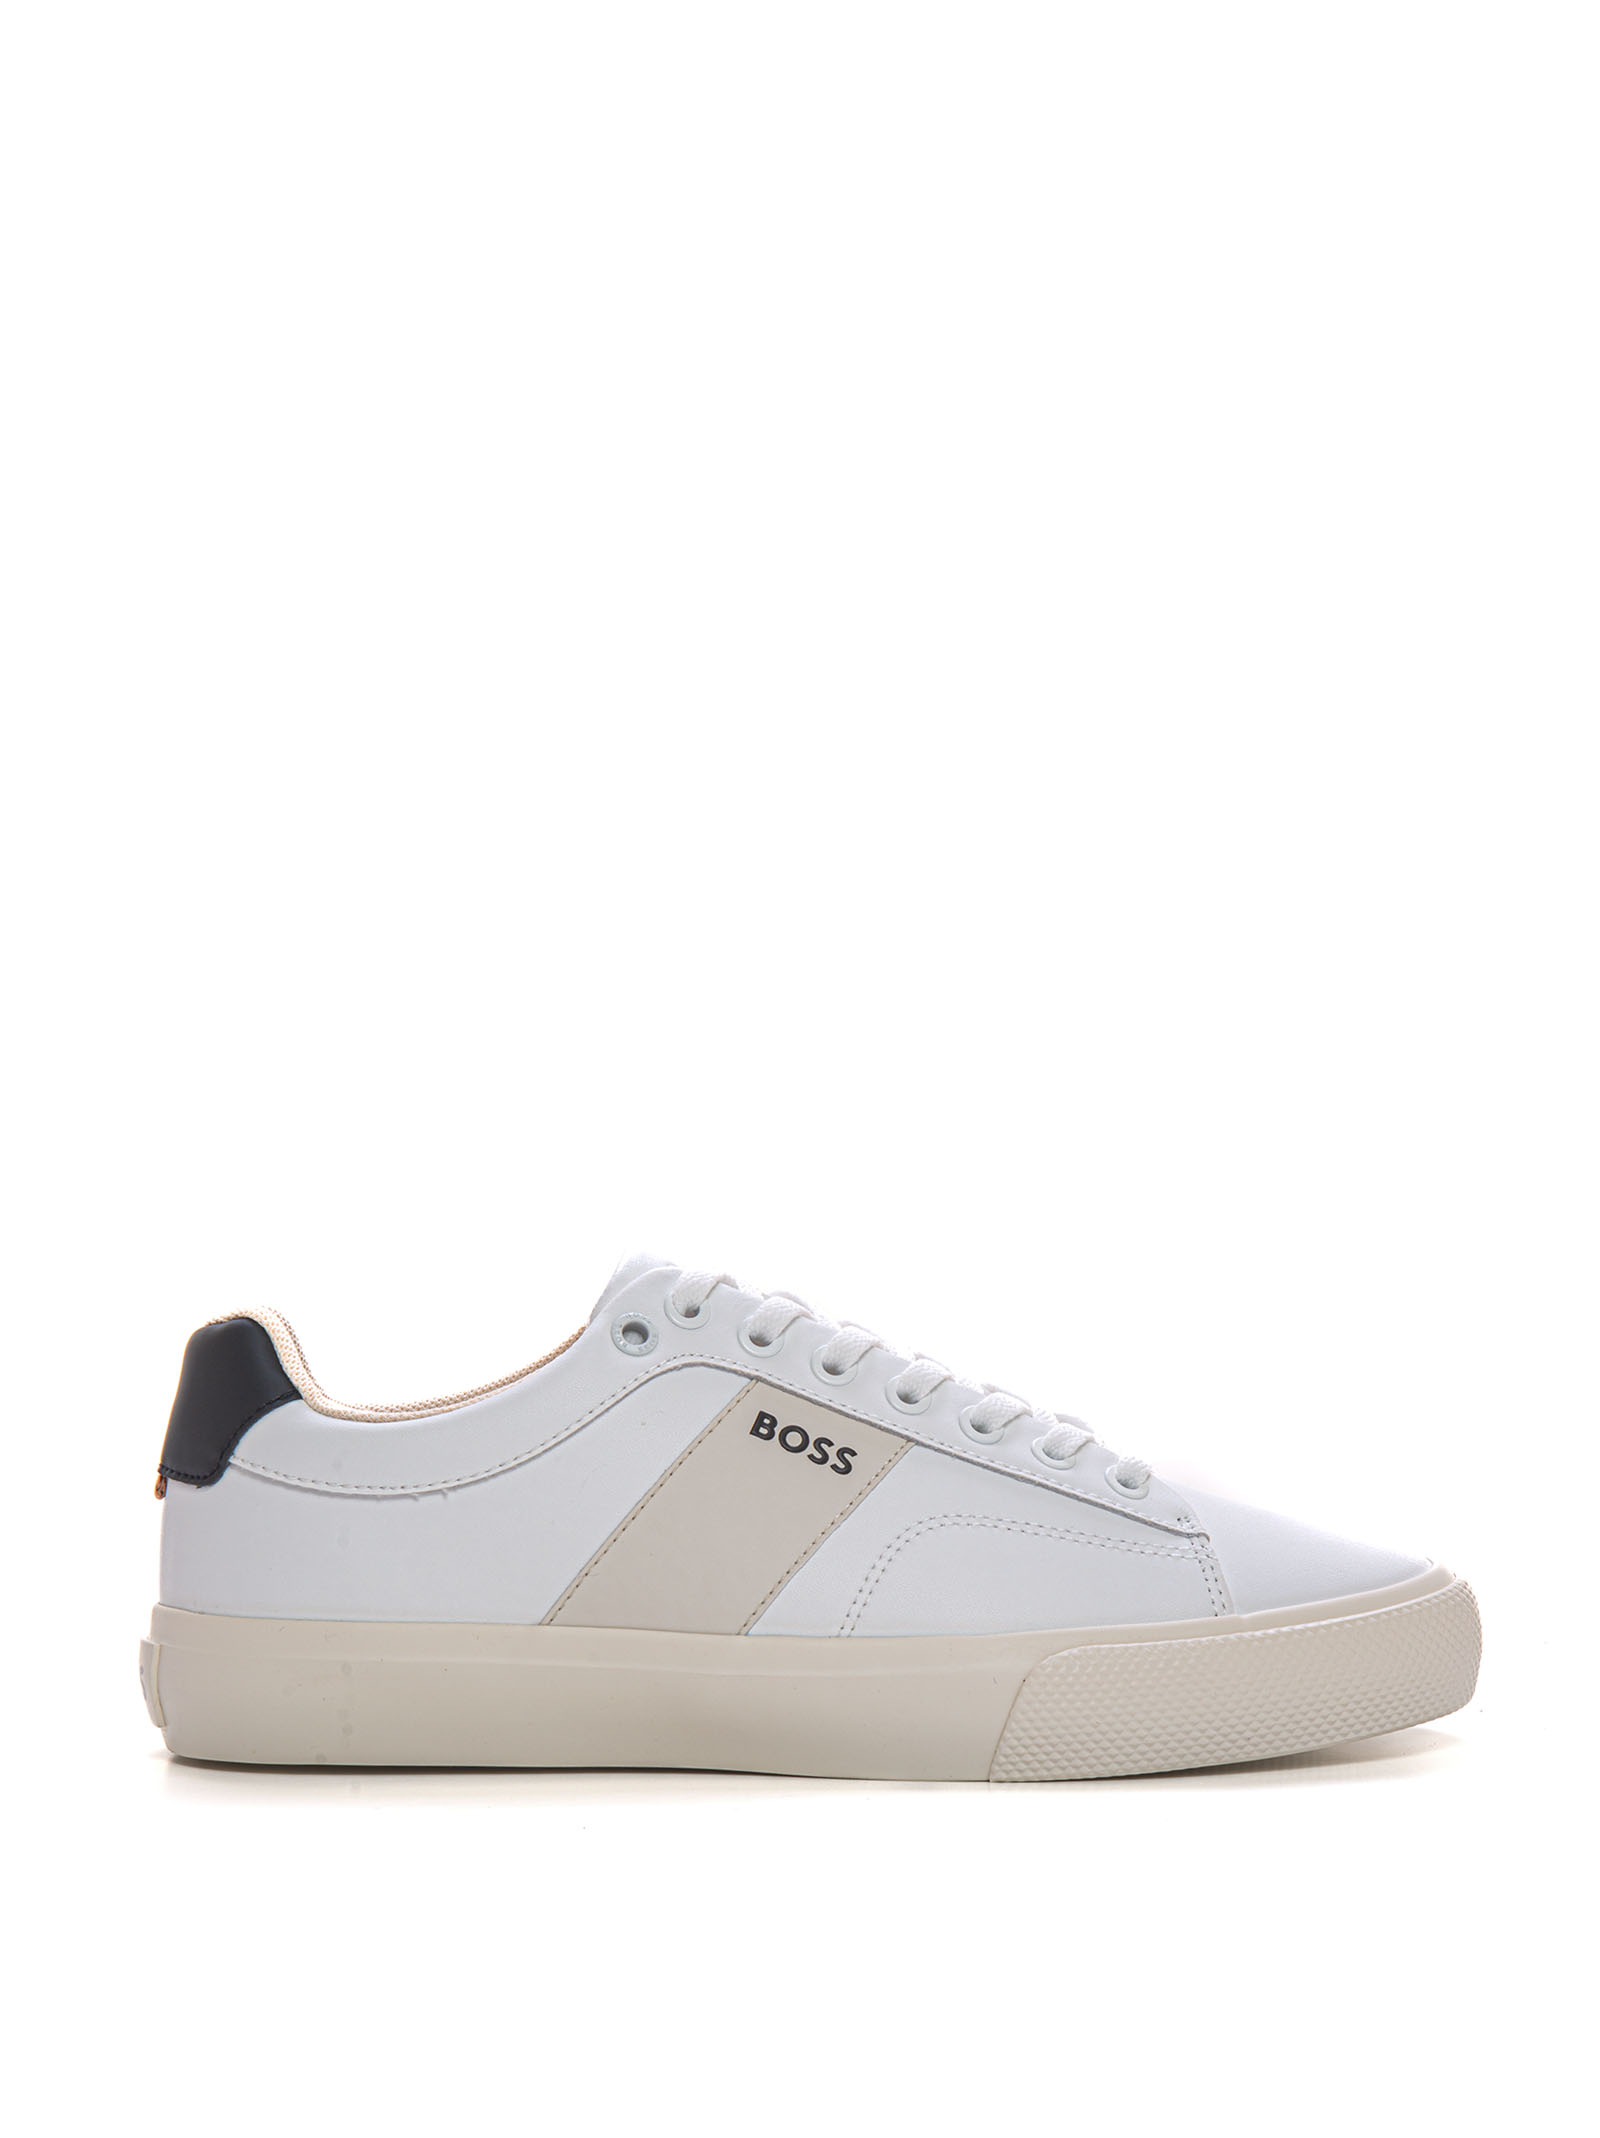 Hugo Boss Aiden-tenn-flrb Low Sneaker  In Suede And Rubber In White